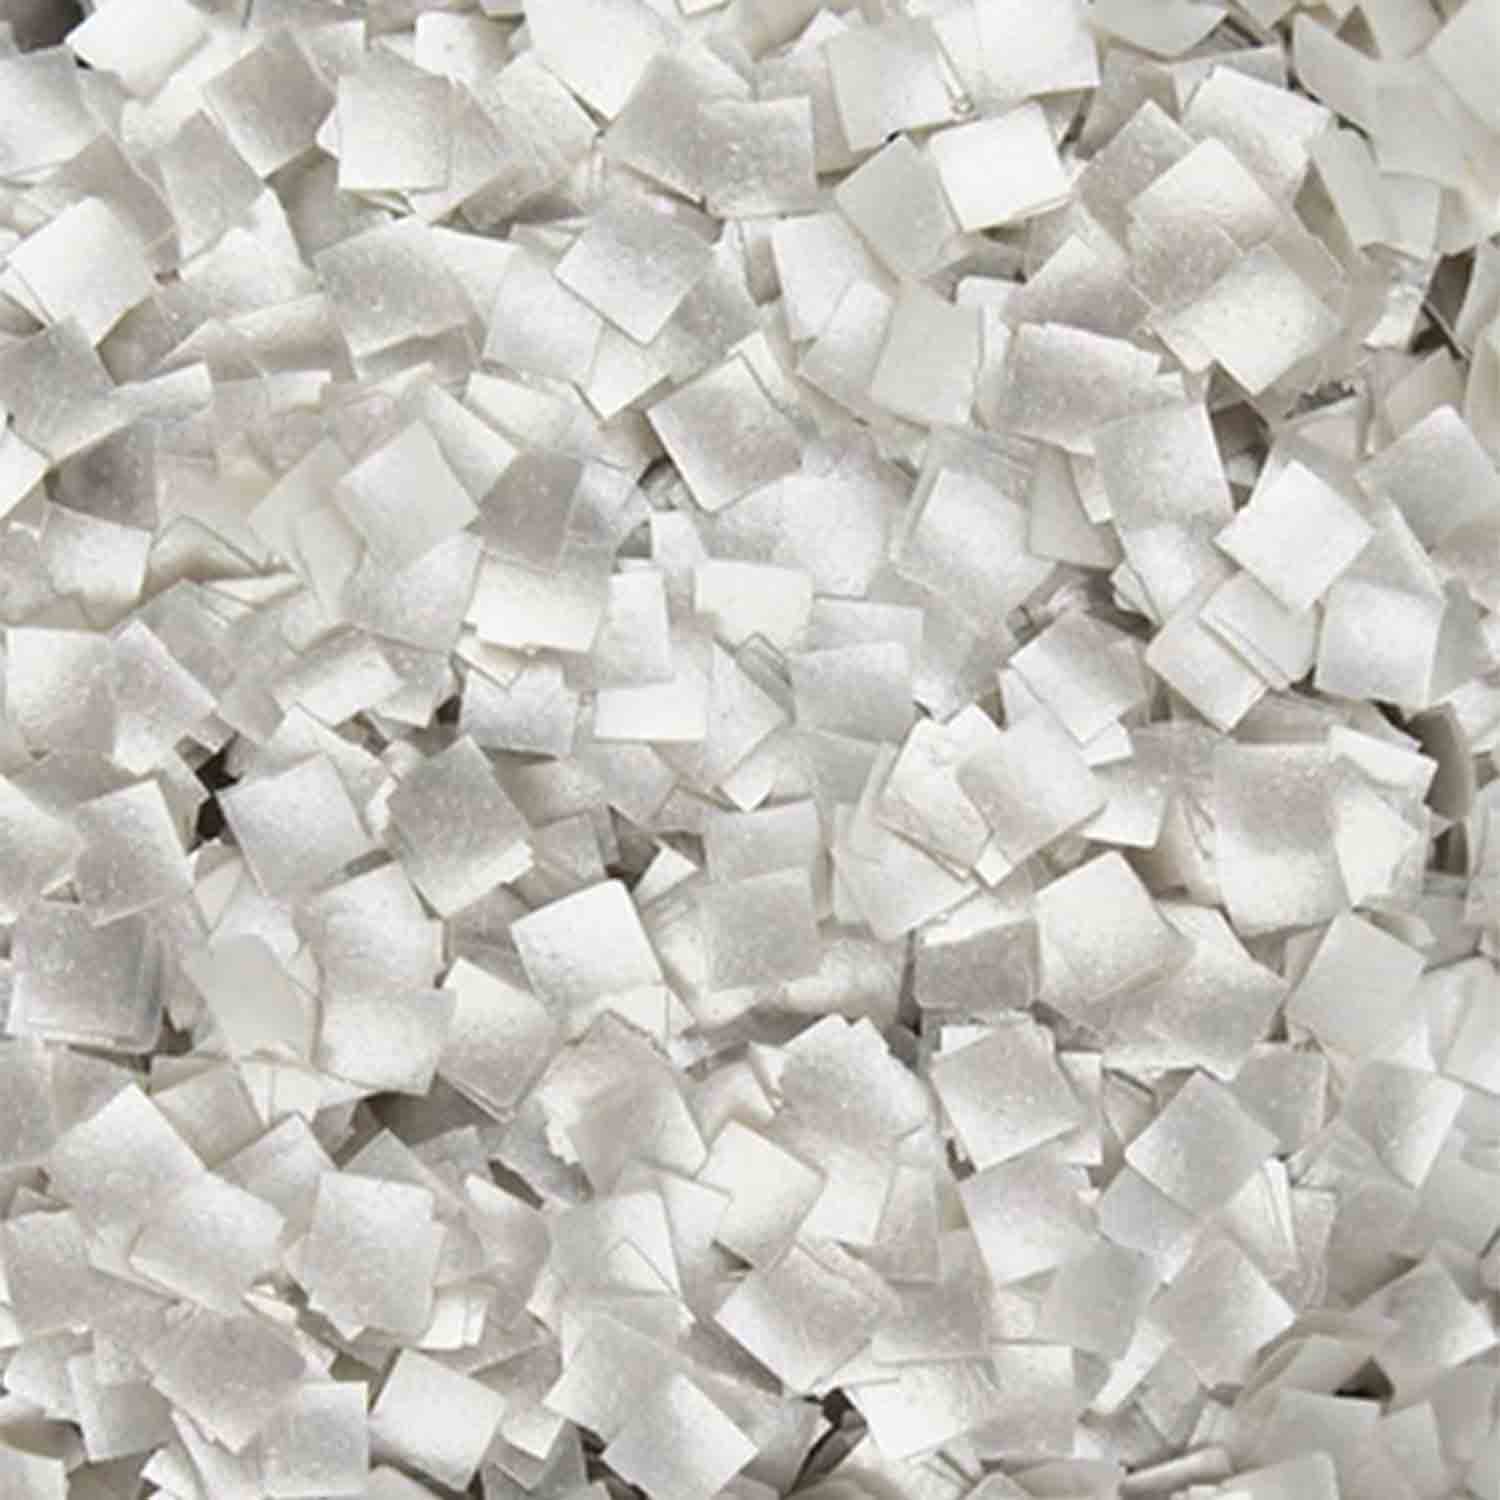 White Edible Shimmer Flakes, Bulk